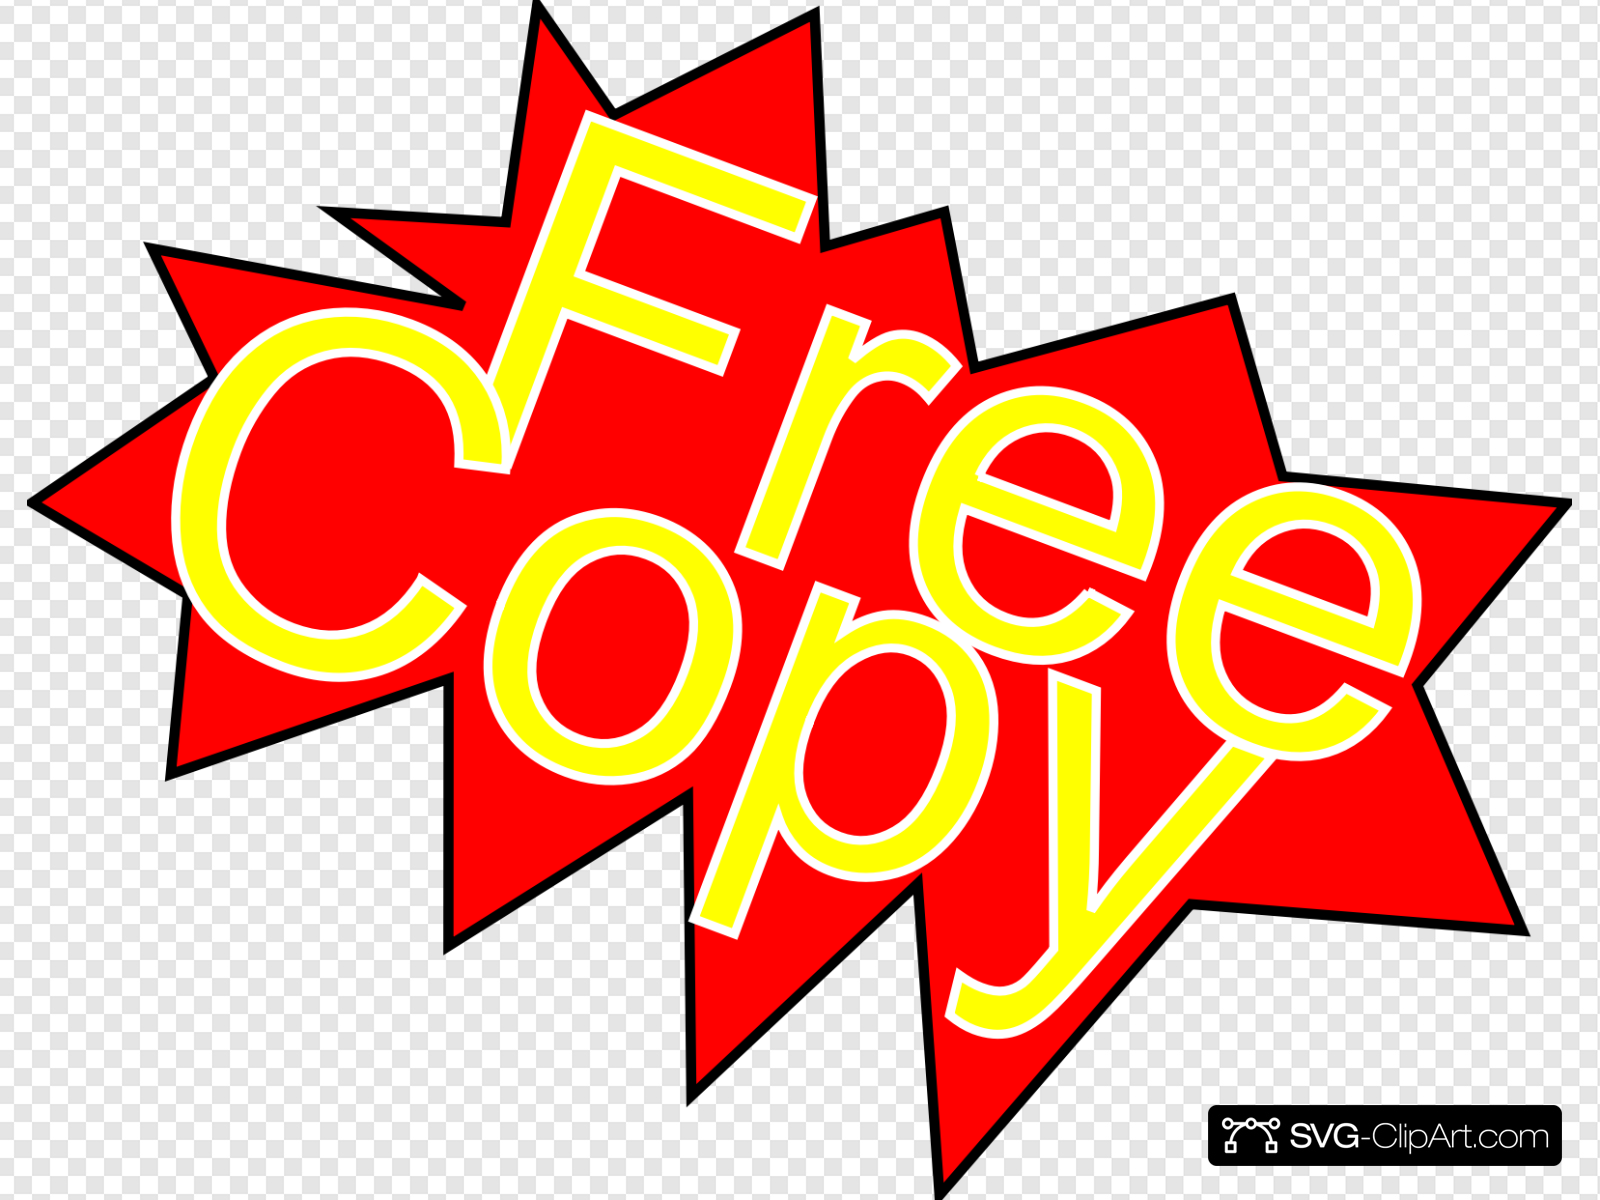 Free Copy Clip art, Icon and SVG.